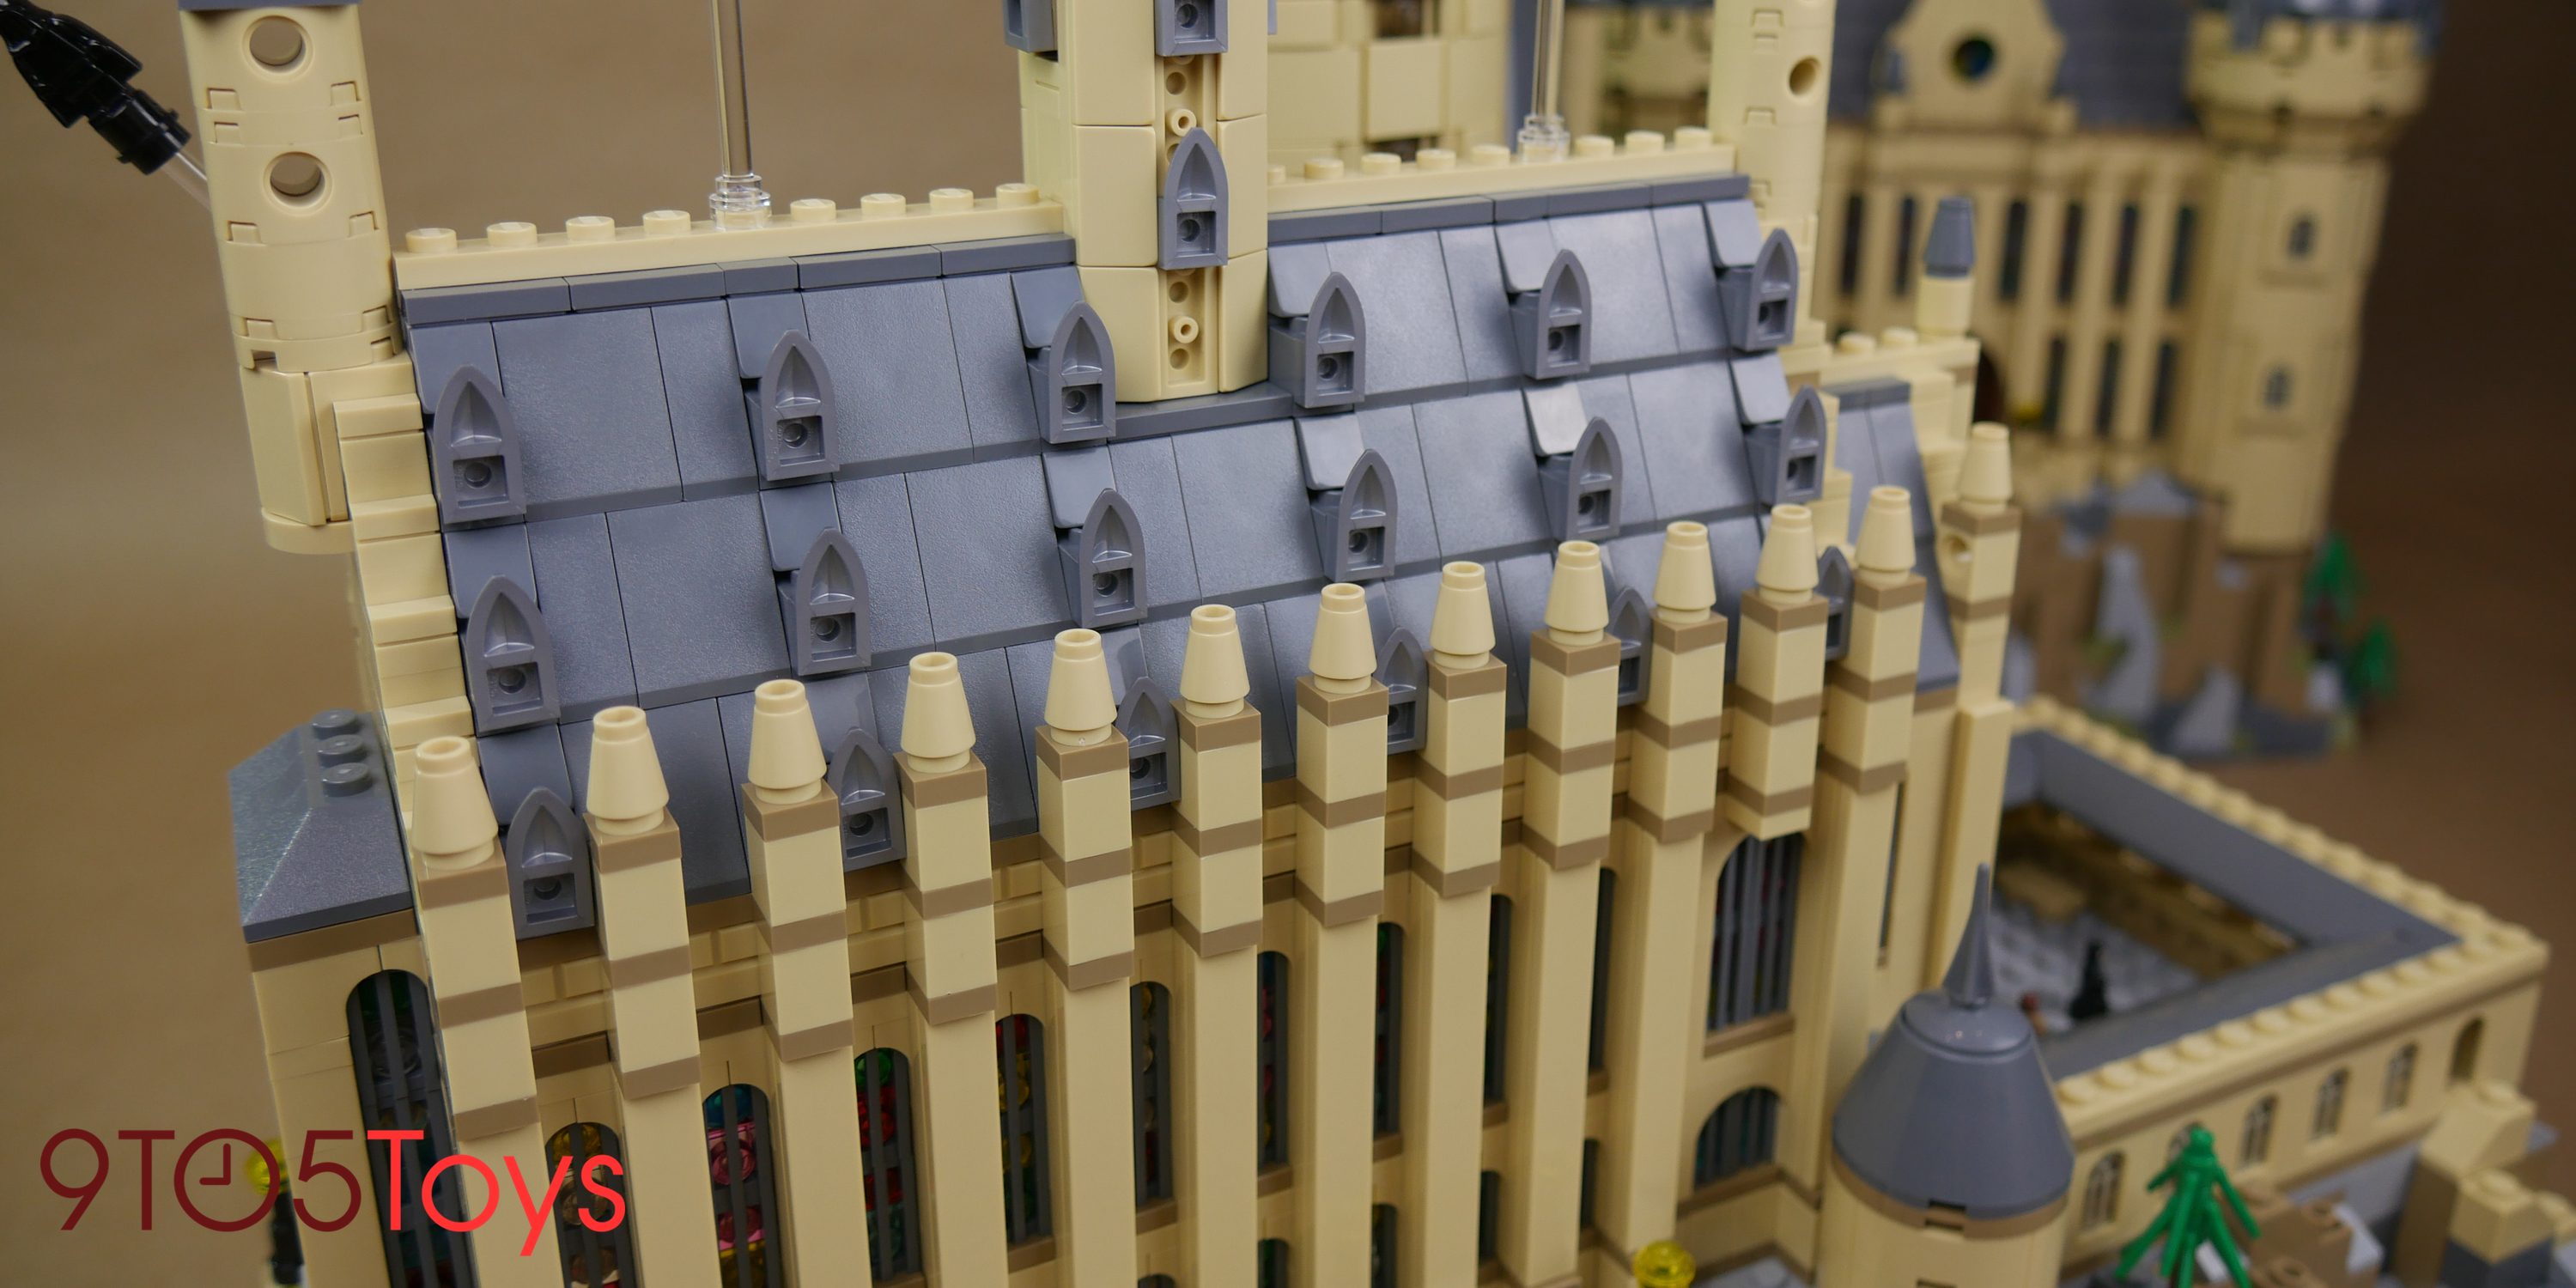 LEGO Harry Potter 71043 Hogwarts Castle, 2nd-largest LEGO set ever